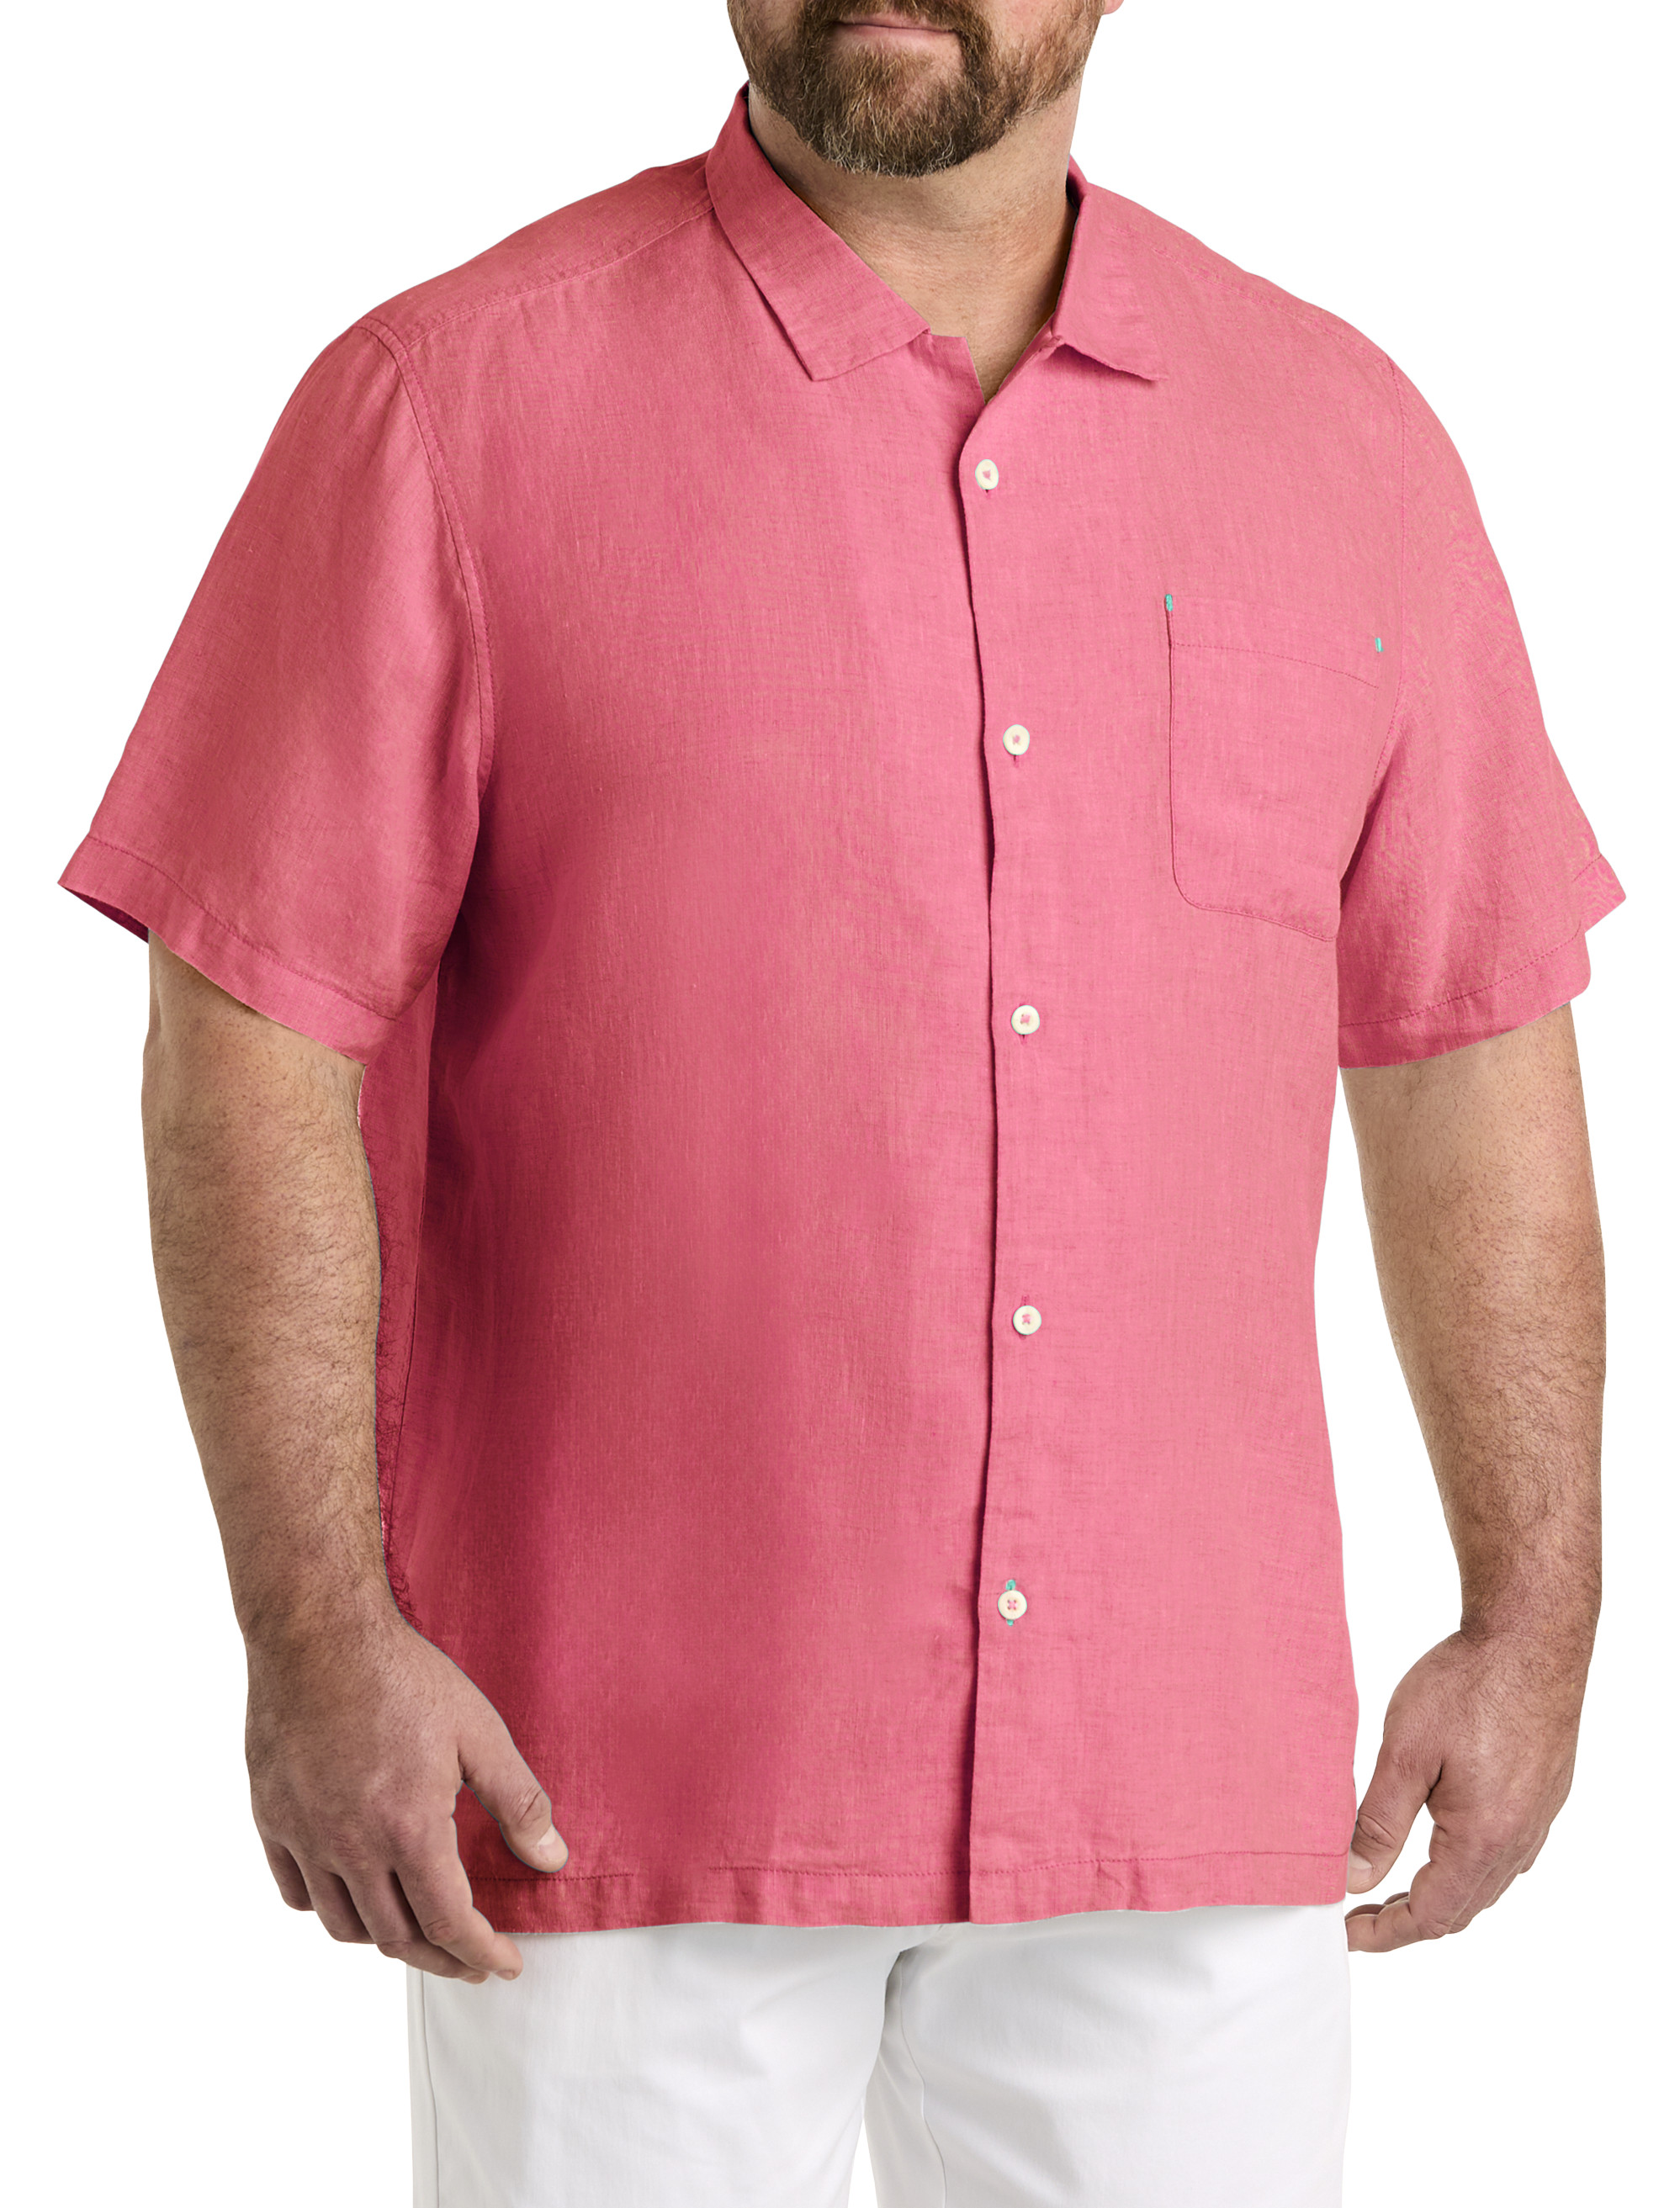 Tommy Bahama, Shirts